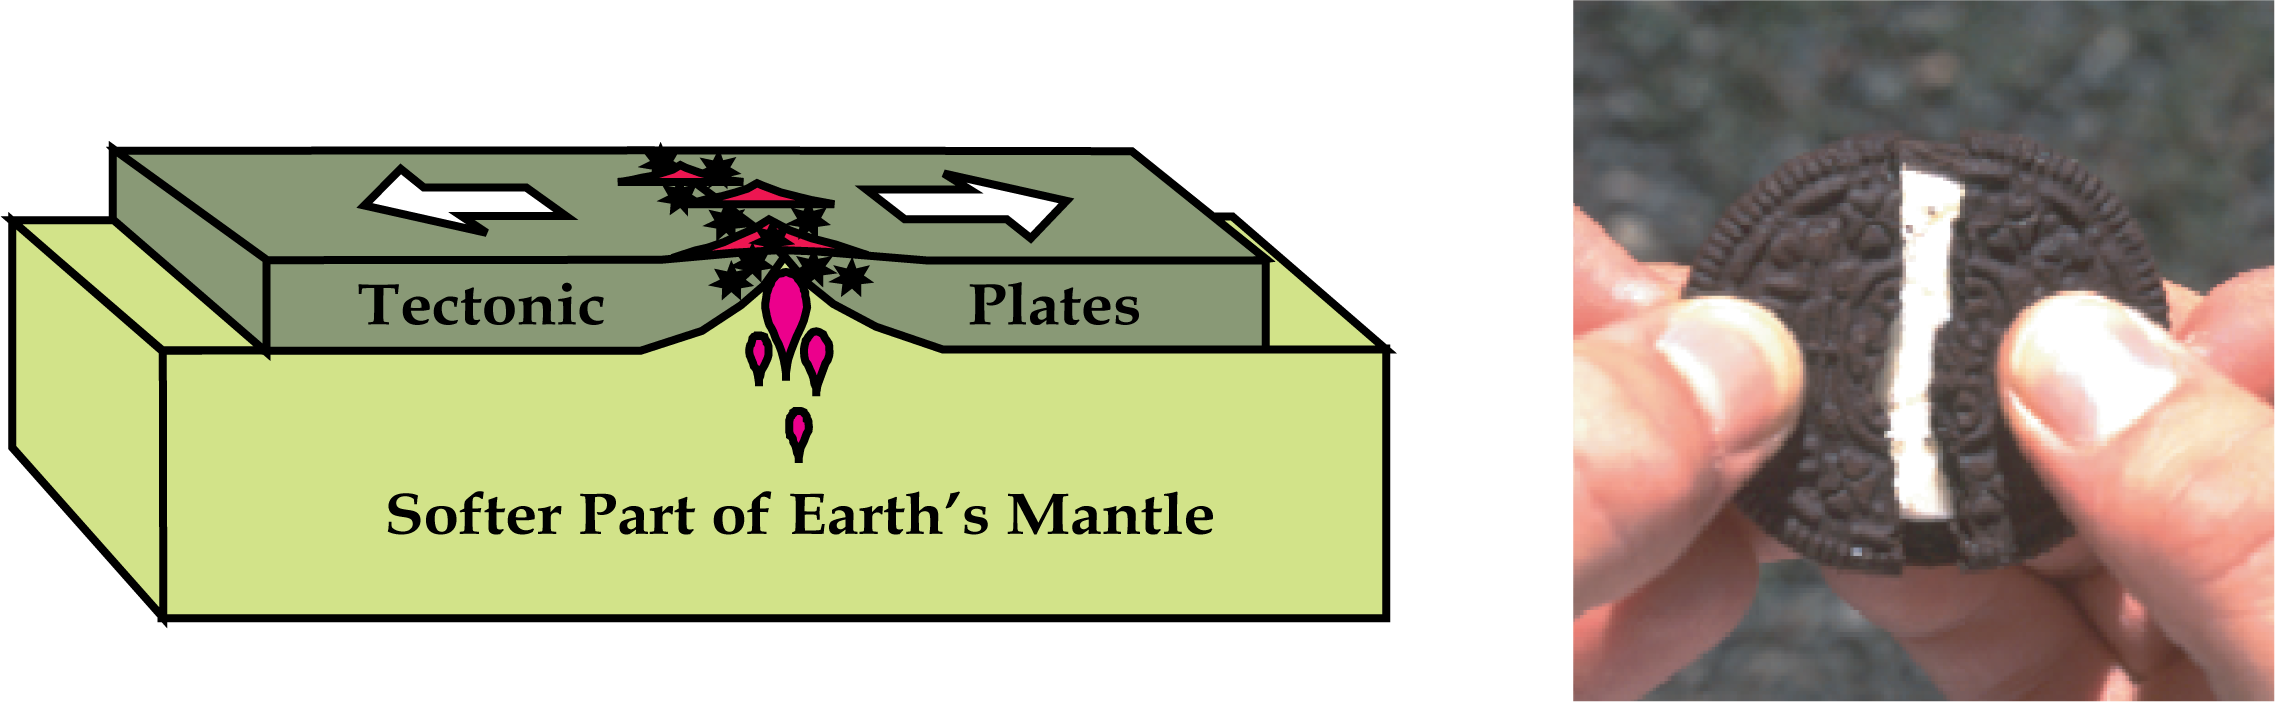 plate boundaries chart